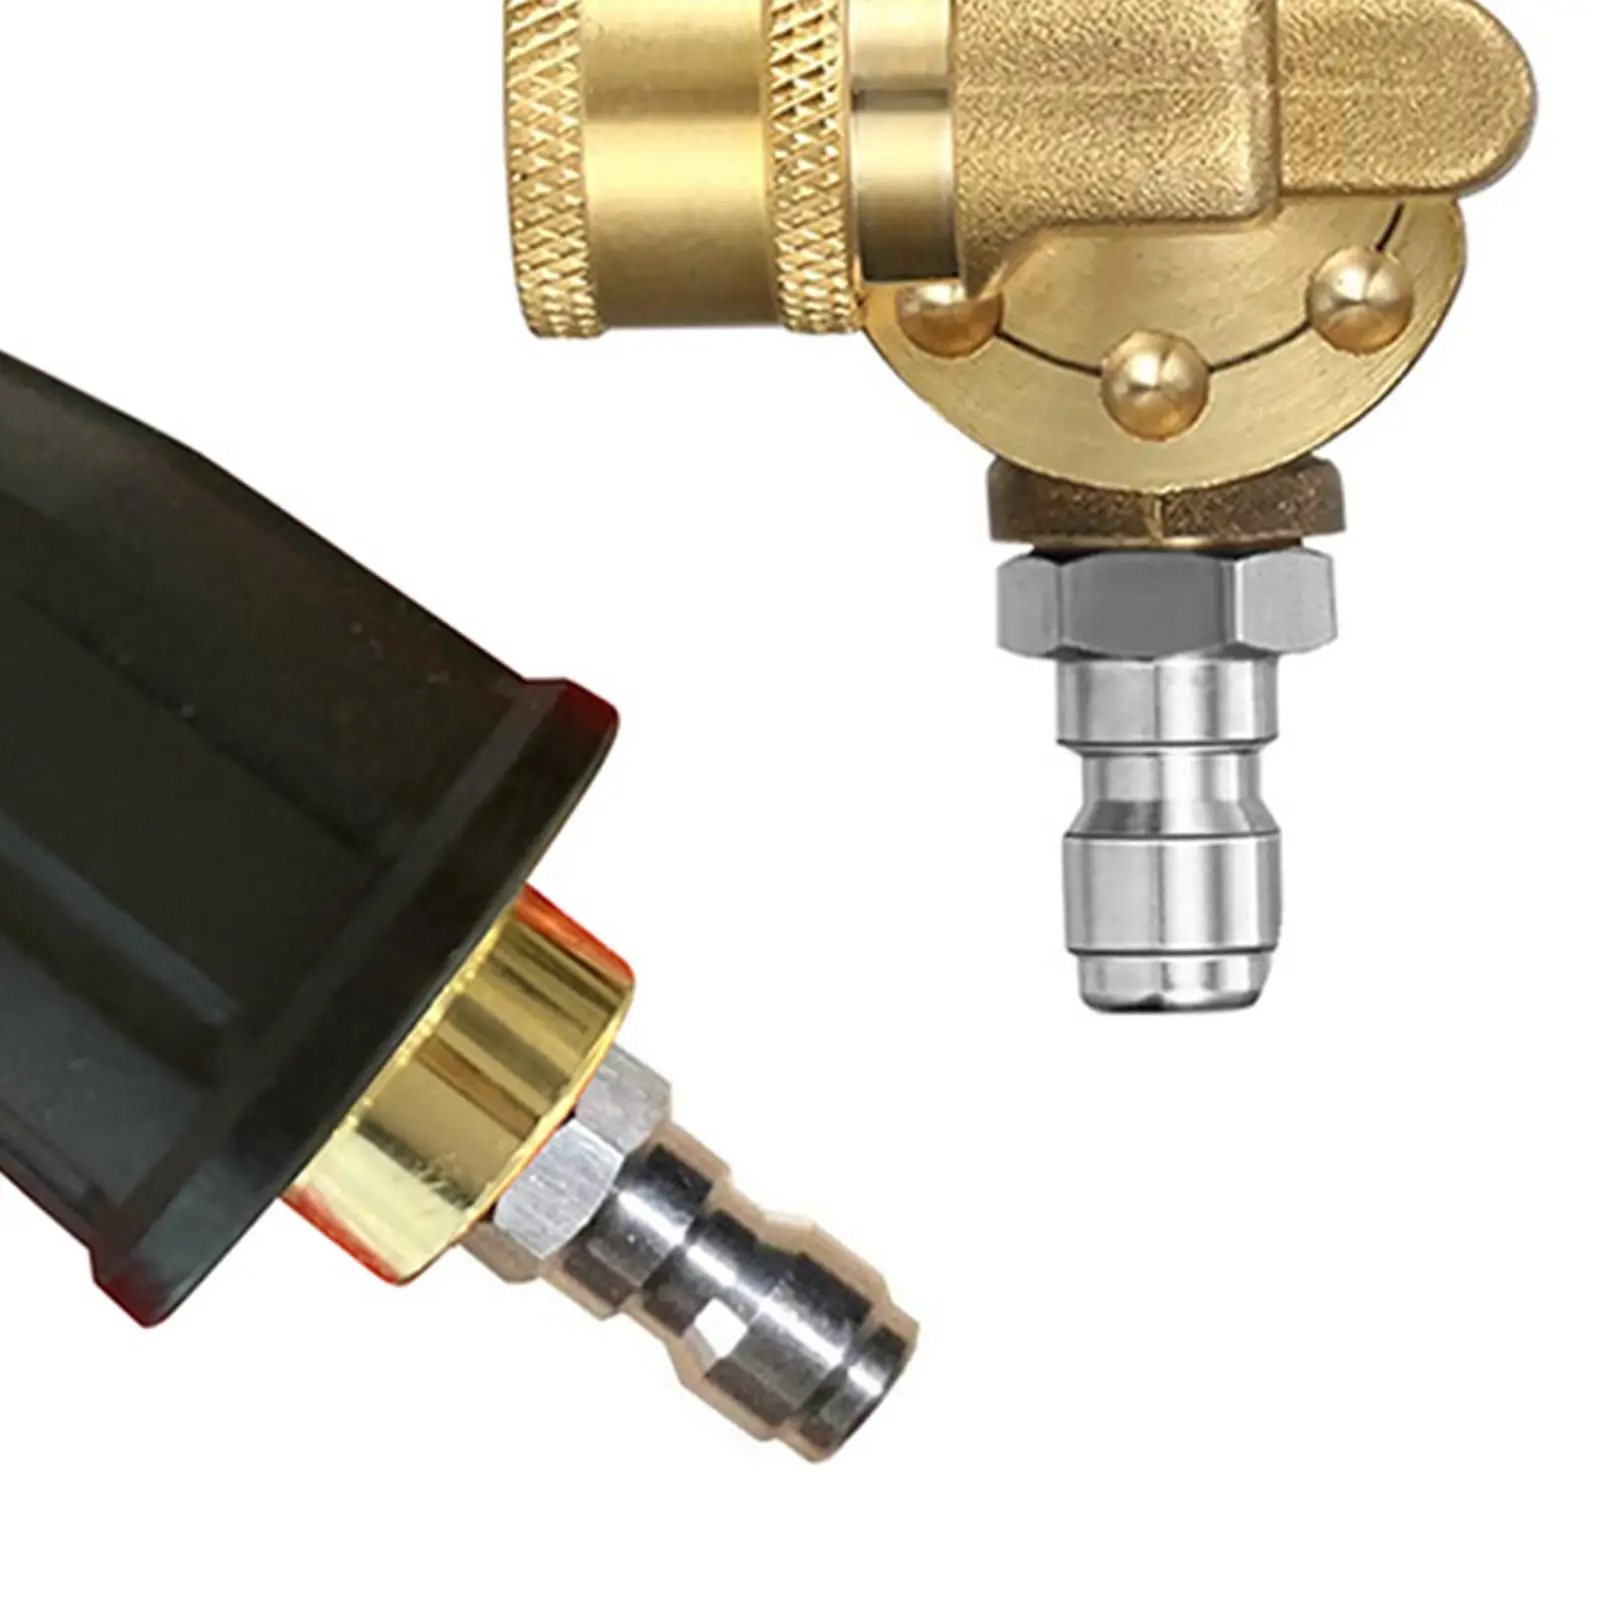 5 Pieces Car Pressure Washer Pressure Washer Adapter Nozzles Sprayer